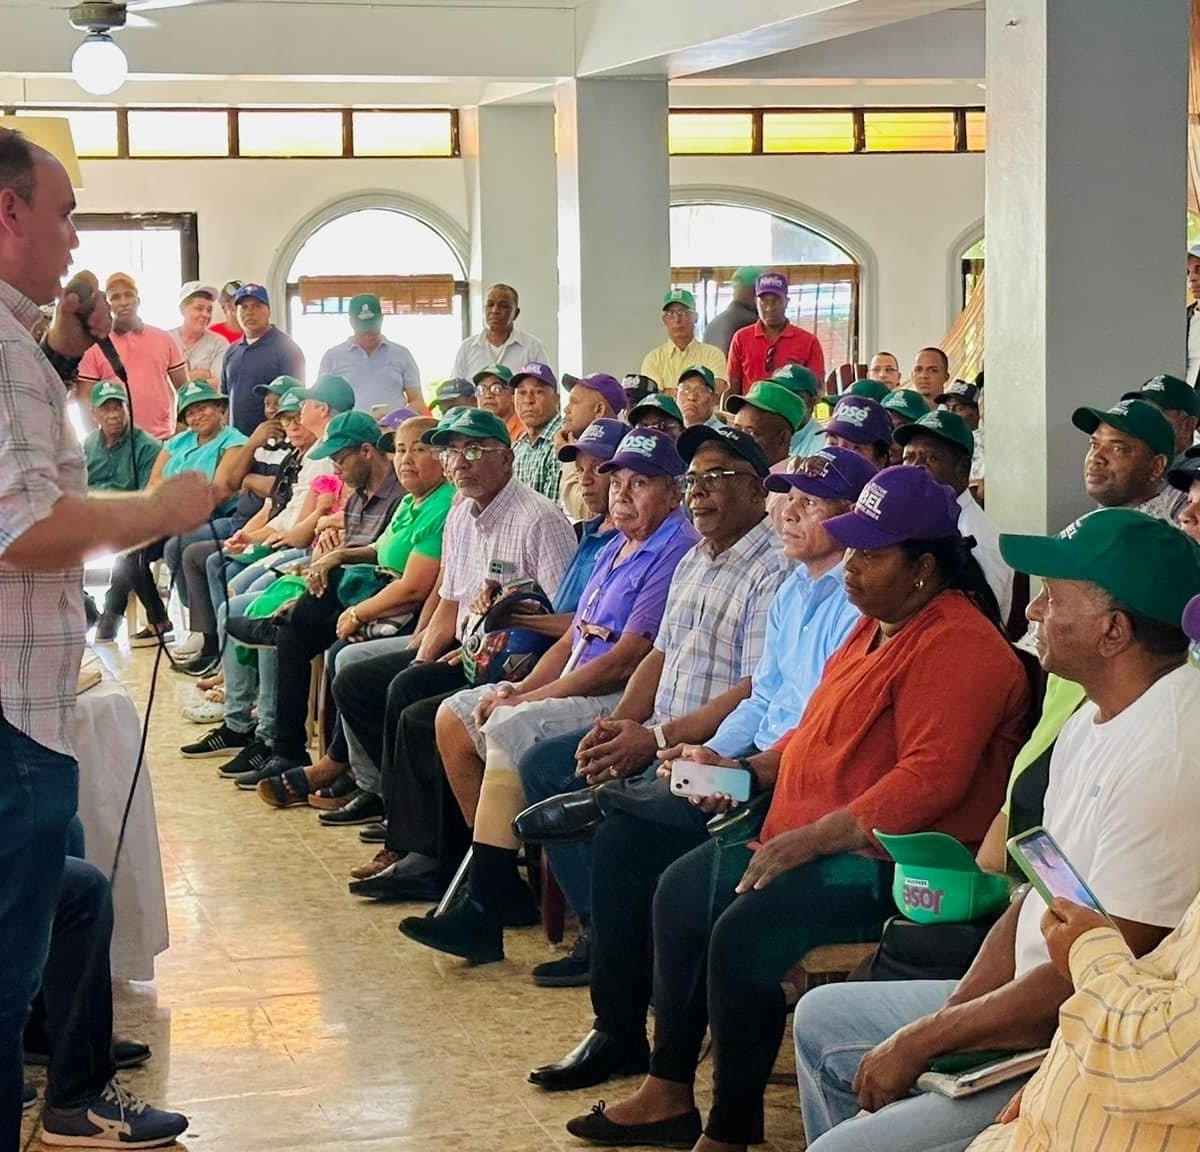 Alianza Rescate RD realiza asamblea provincial de dirigentes PLD/FP/PRD en Barahona; harán actividades unidos